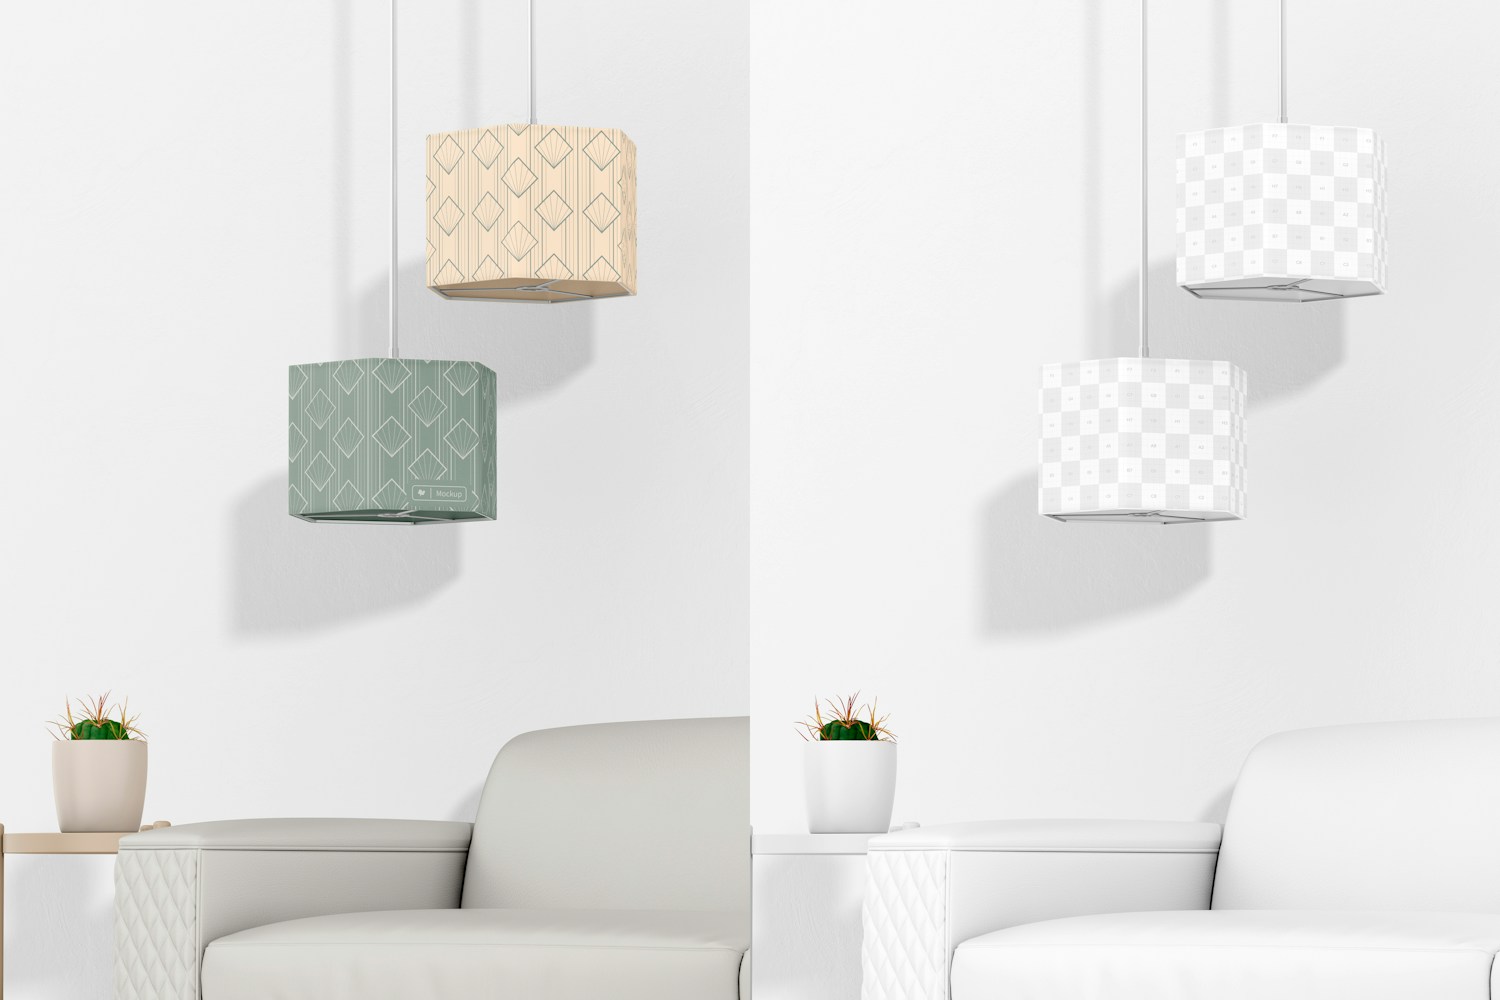 Hexagonal Pendant Lamps Mockup, with Sofa